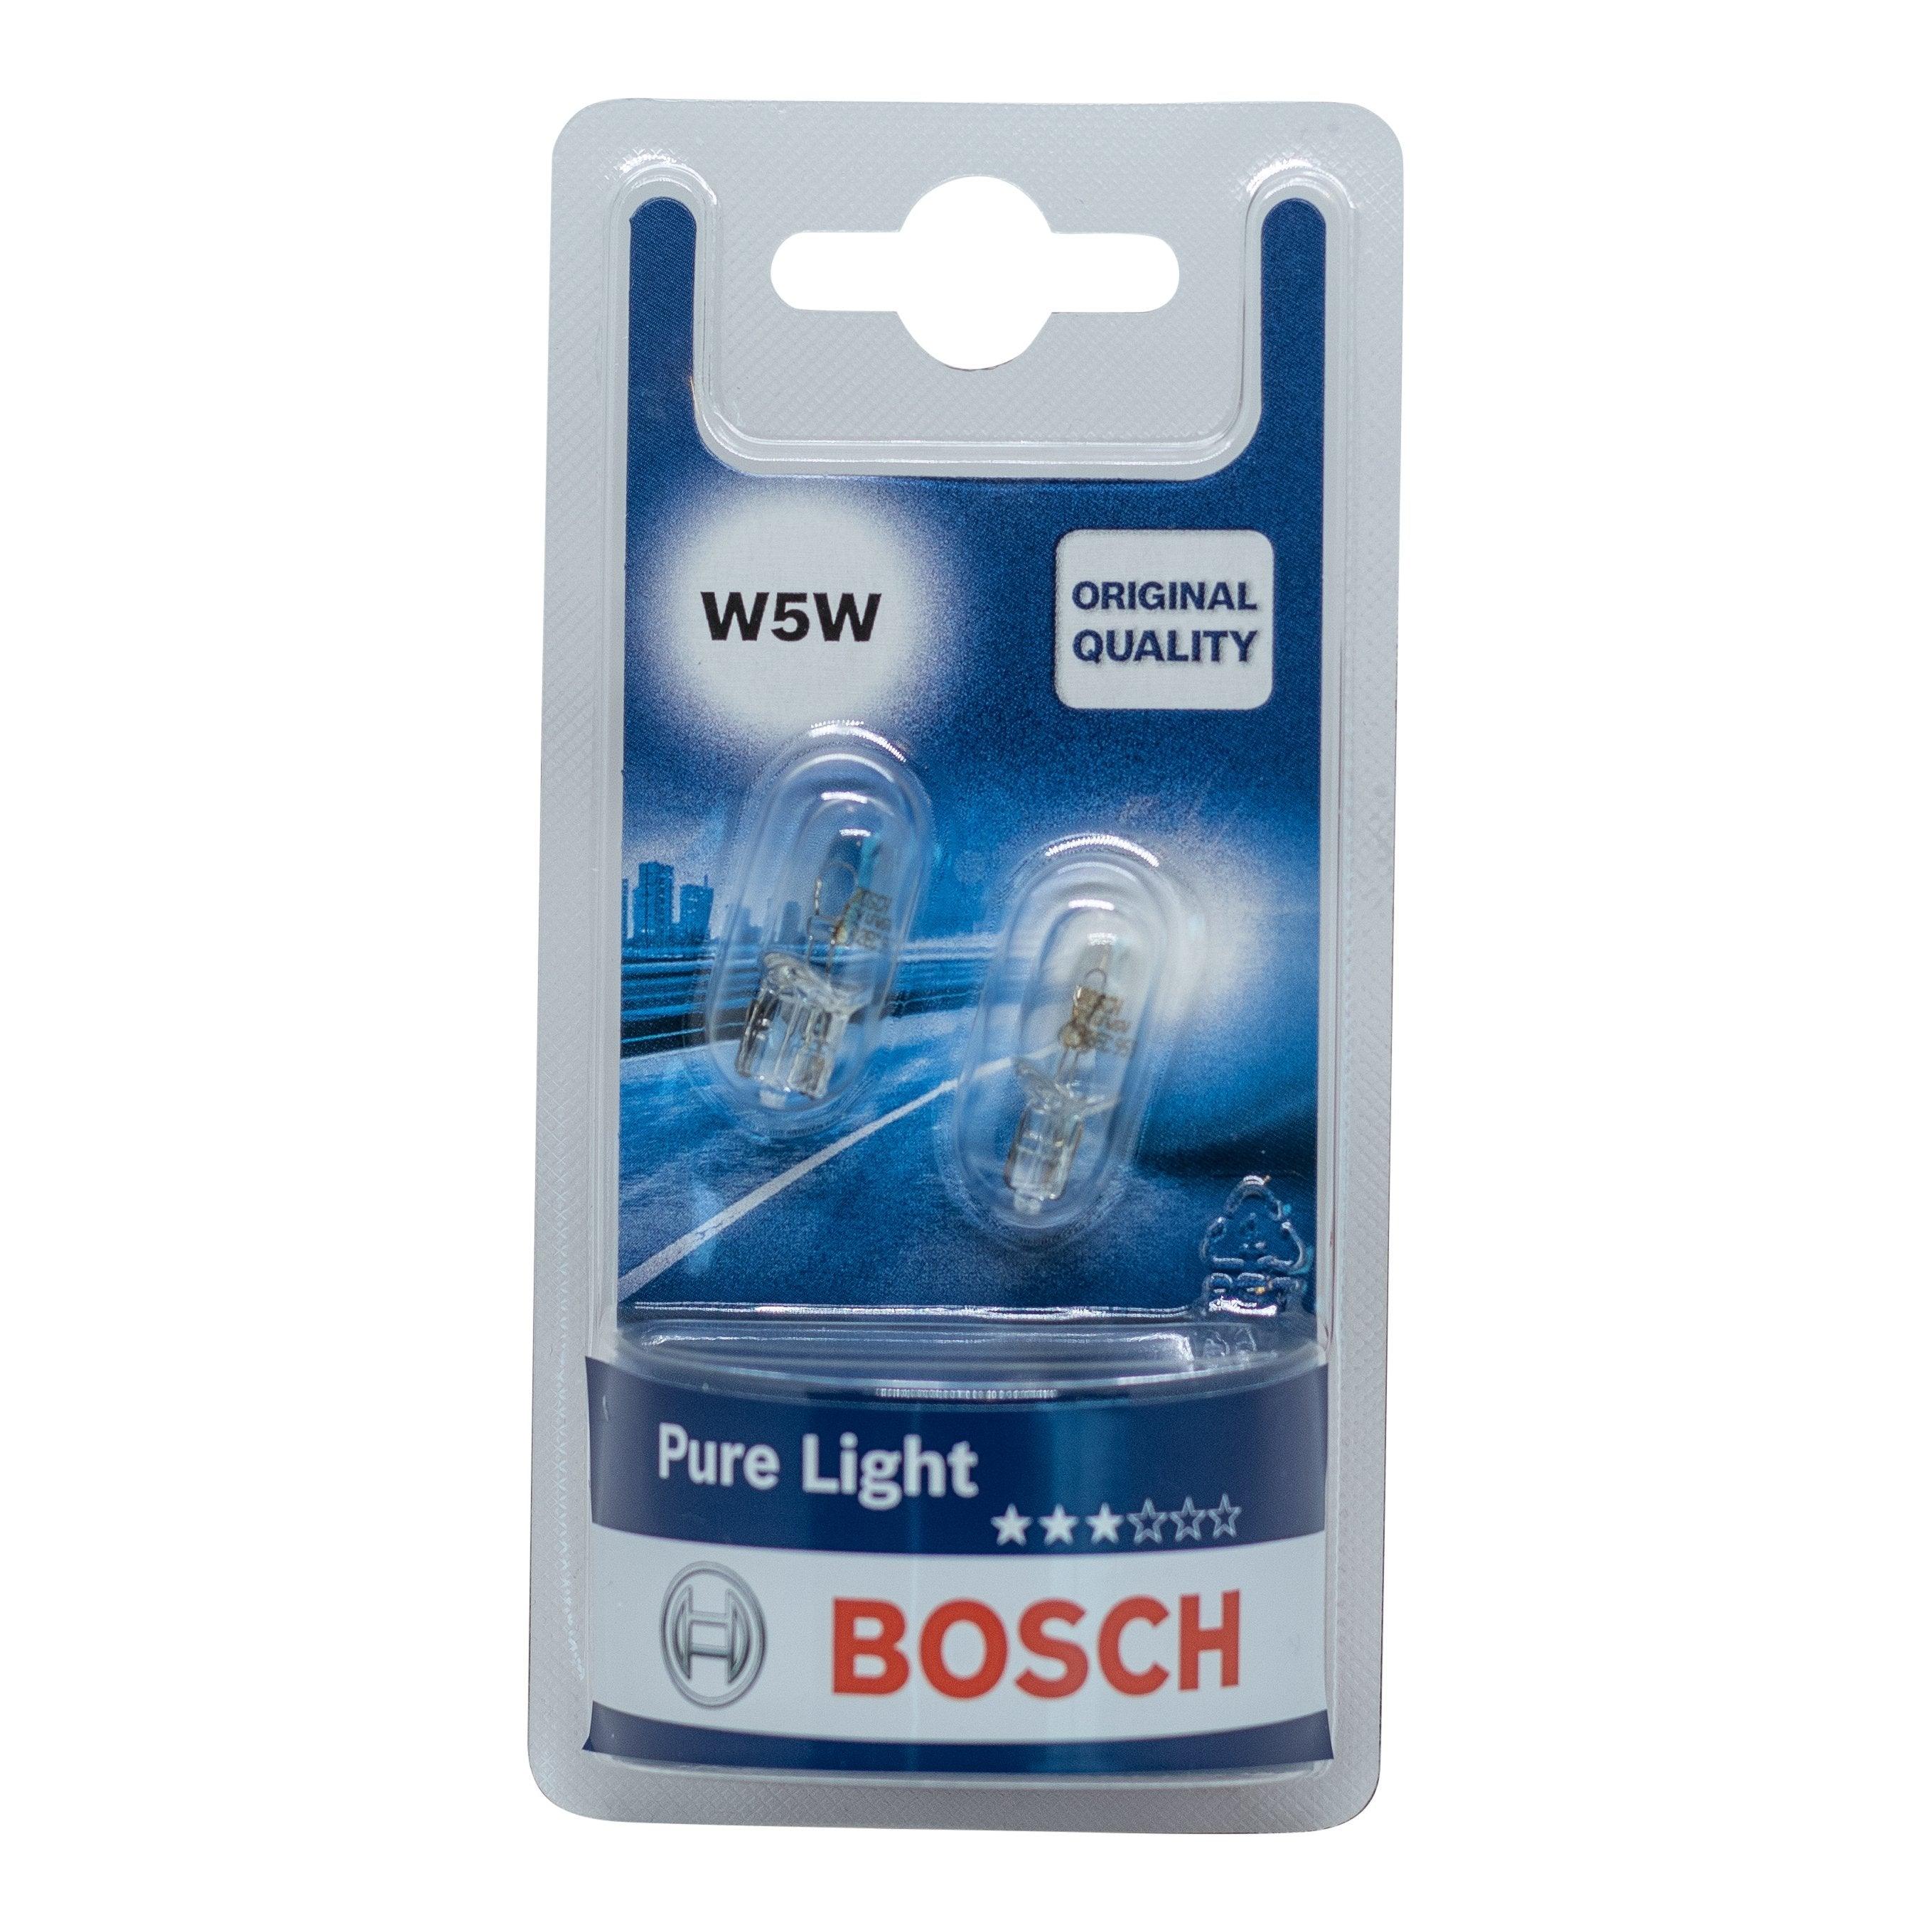 Bosch Pure Light W5W thumbnail